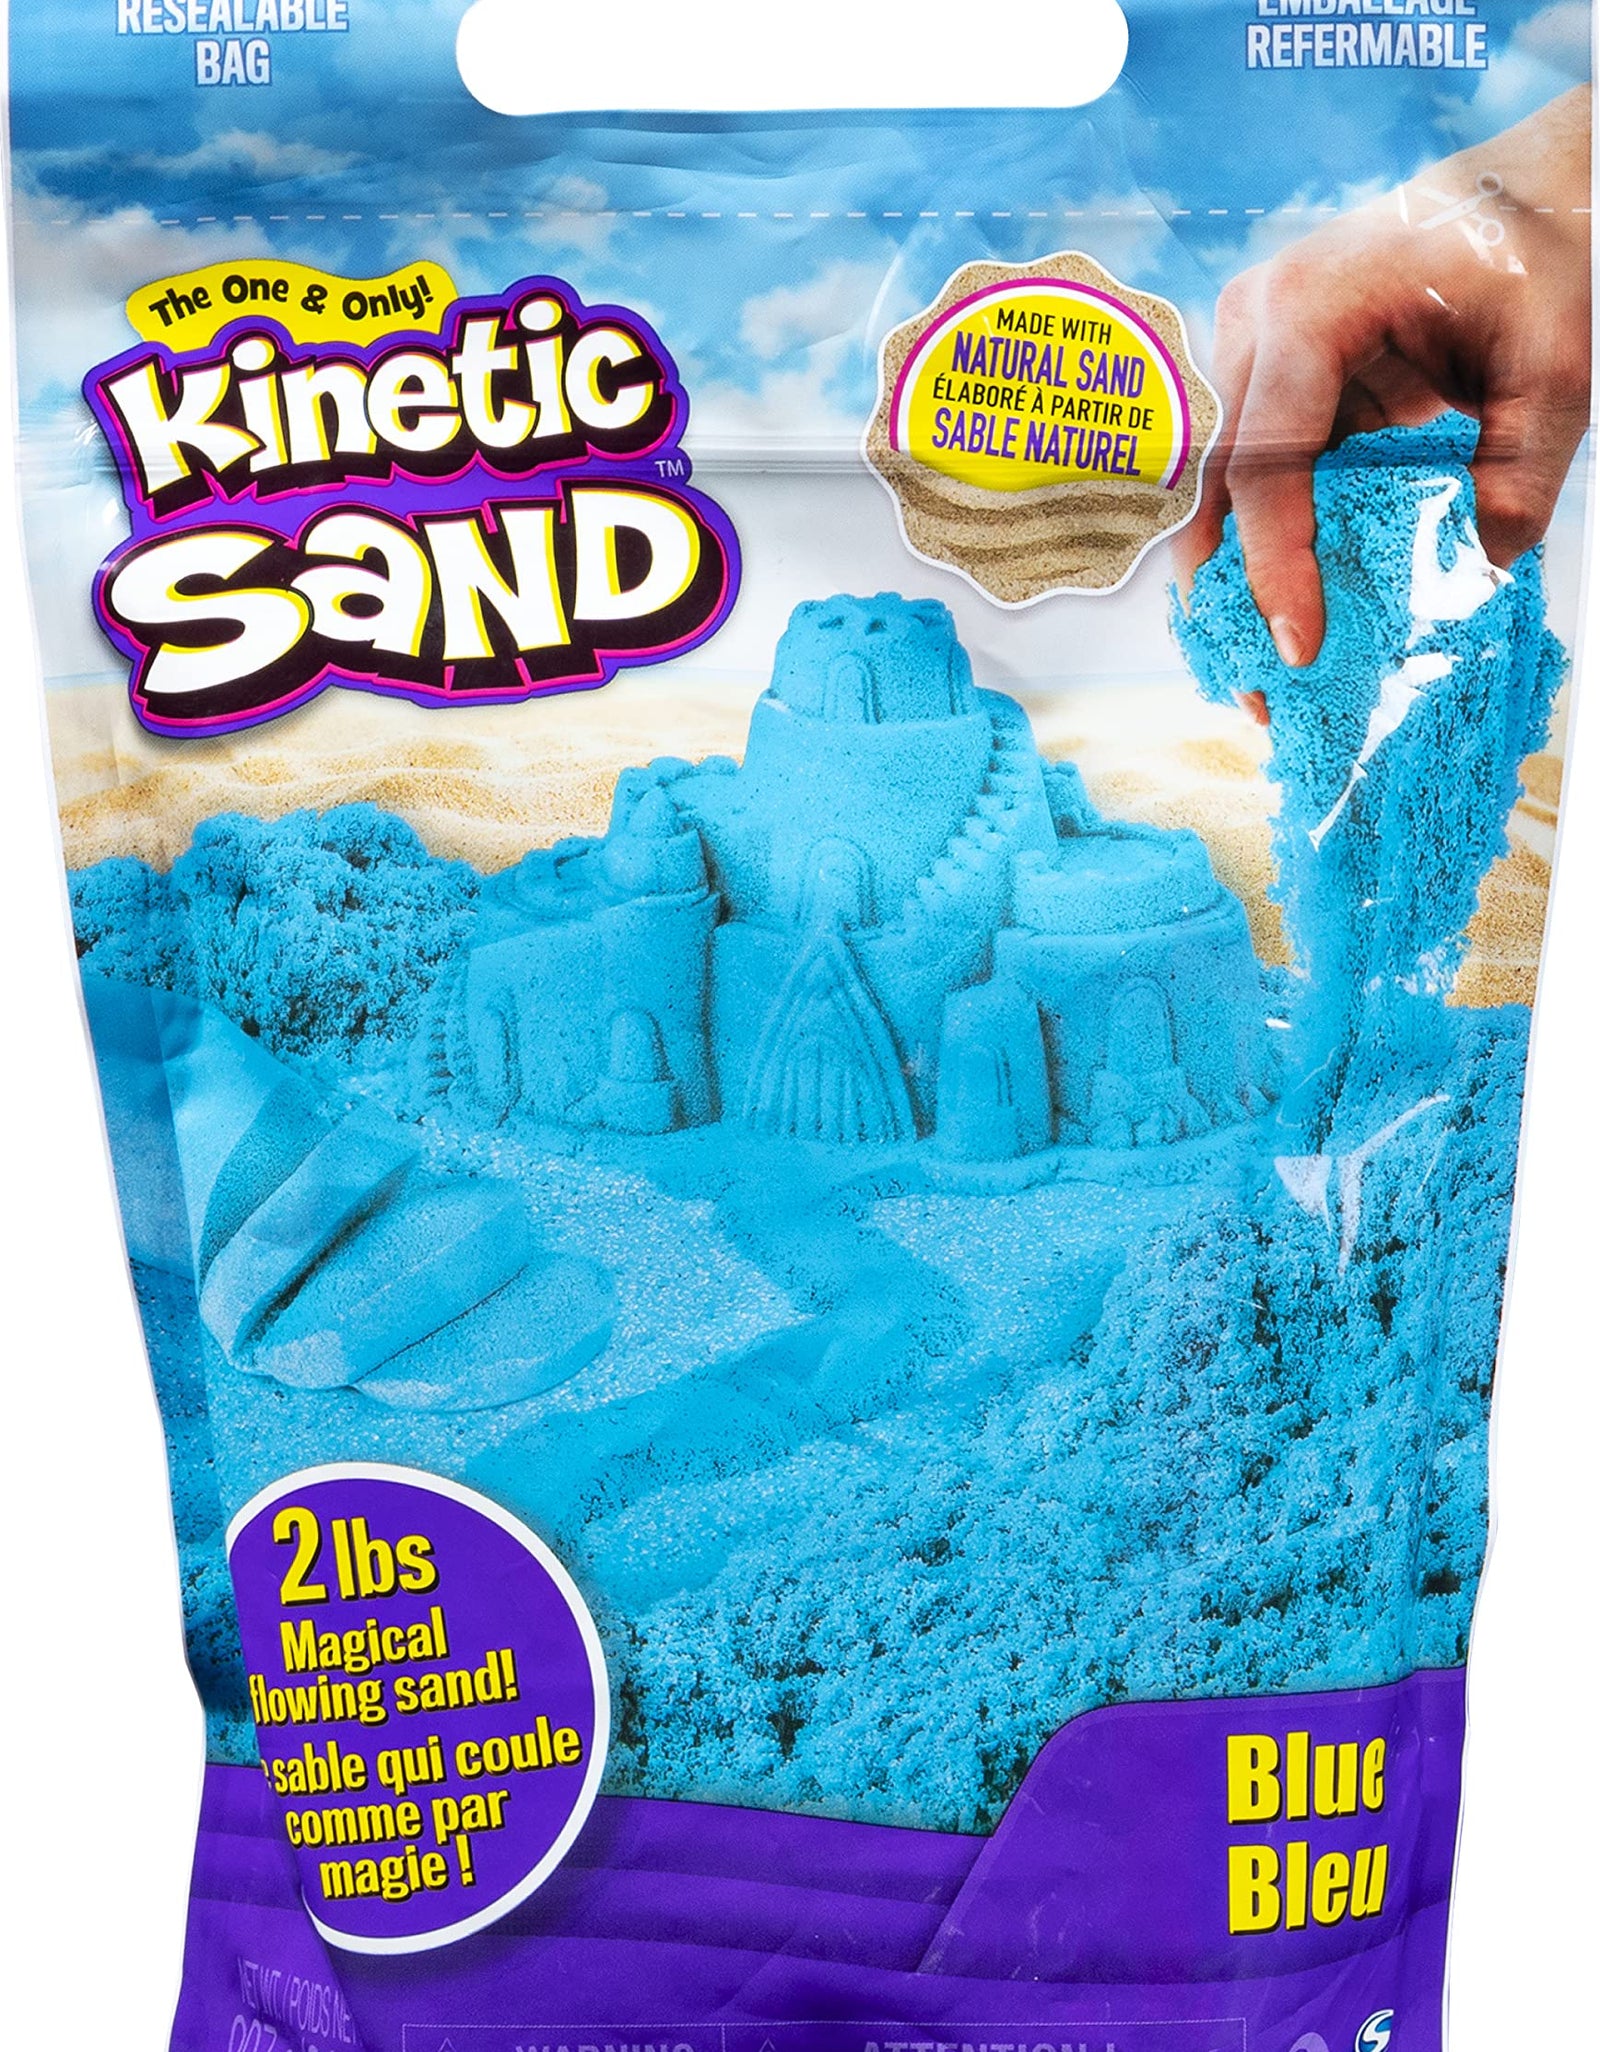 Kinetic Sand, The Original Moldable Sensory Play Sand Toys for Kids, Green, 2 lb. Resealable Bag, Ages 3+